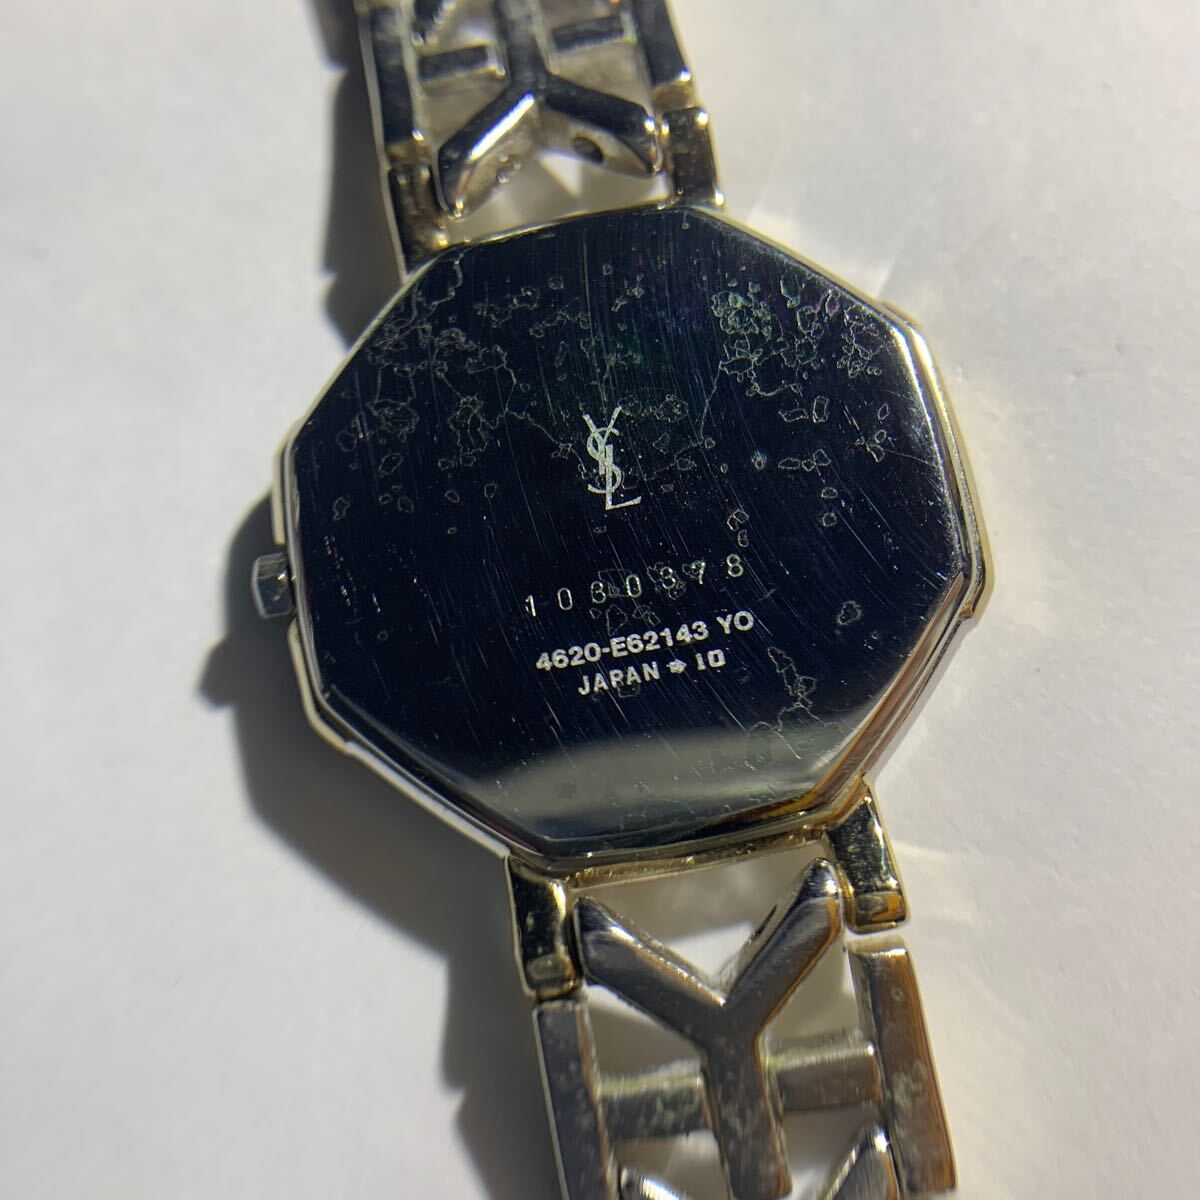 YEVS SAINT LAURENT イブサンローラン アナログ 腕時計 2針 レディース 1030378 4620-E62143 YO (9540)の画像5